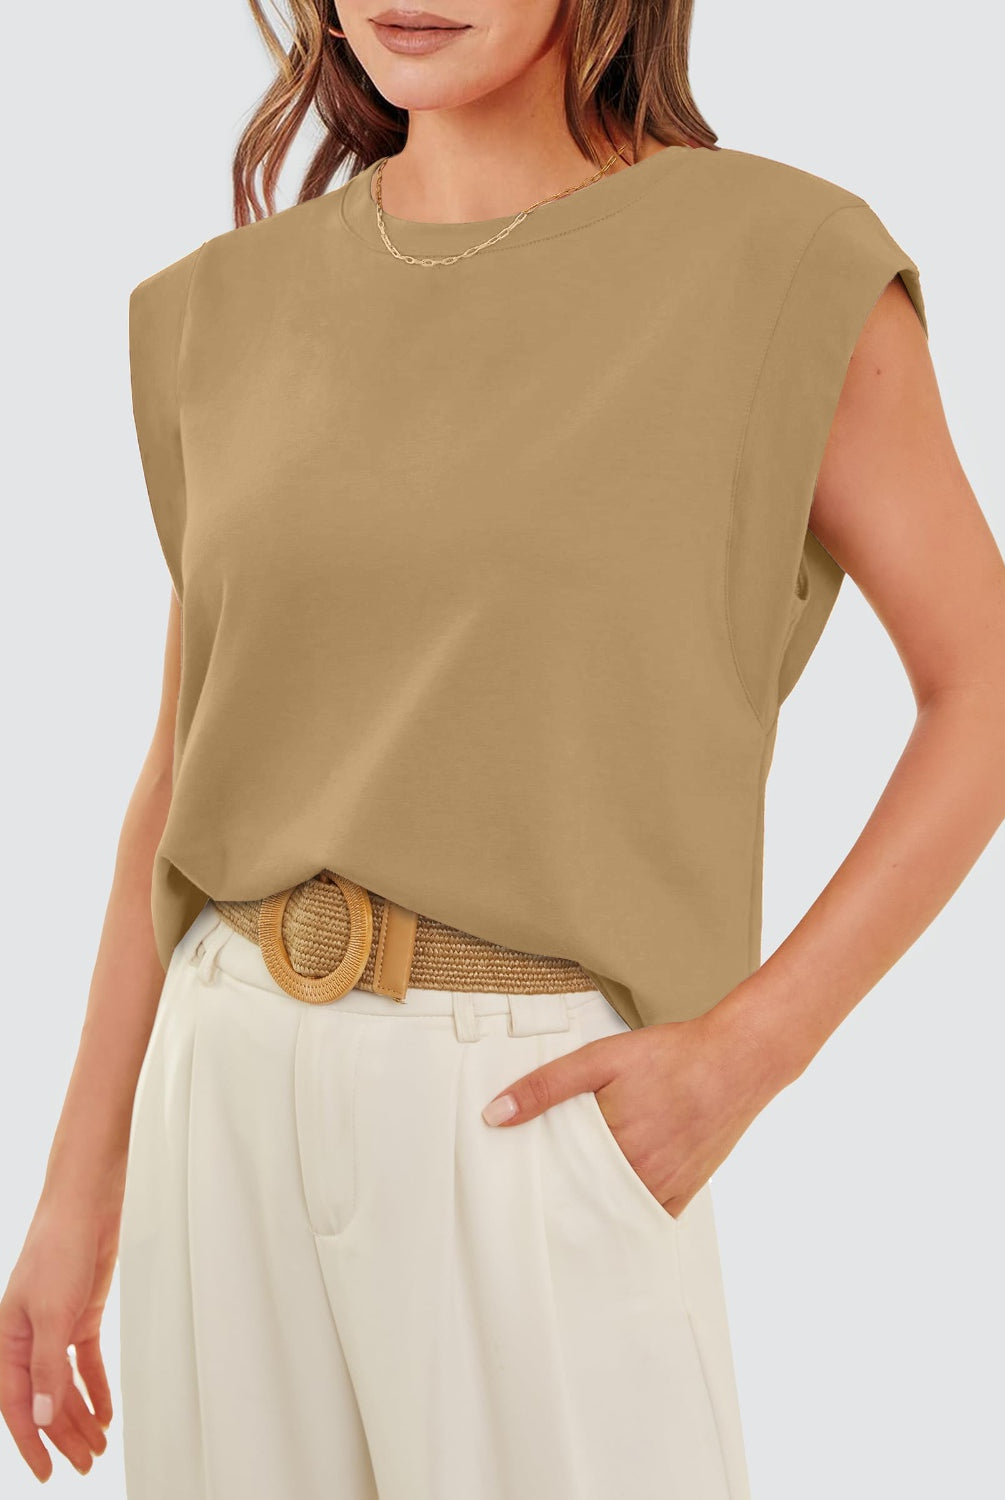 Round Neck Cap Sleeve Tank-Krush Kandy, Women's Online Fashion Boutique Located in Phoenix, Arizona (Scottsdale Area)